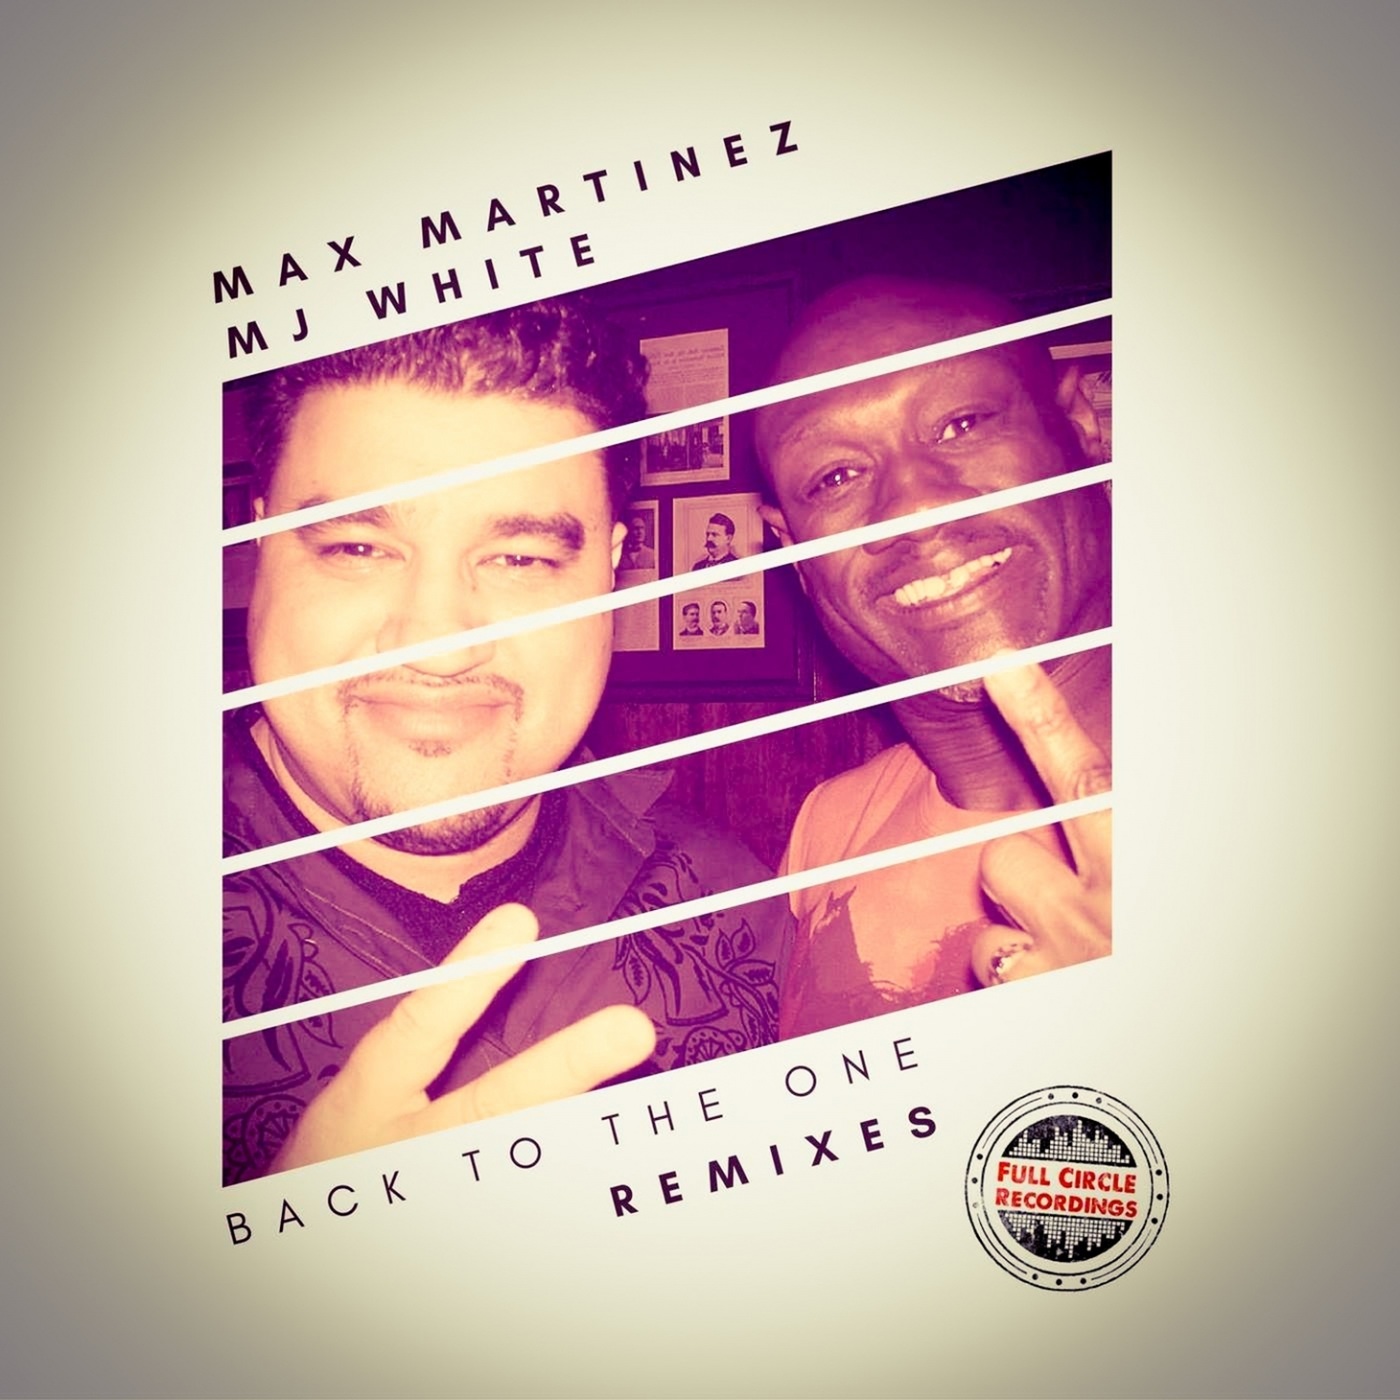 Max Martinez & MJ White - Back to the One (Remixes) / Full Circle Recordings